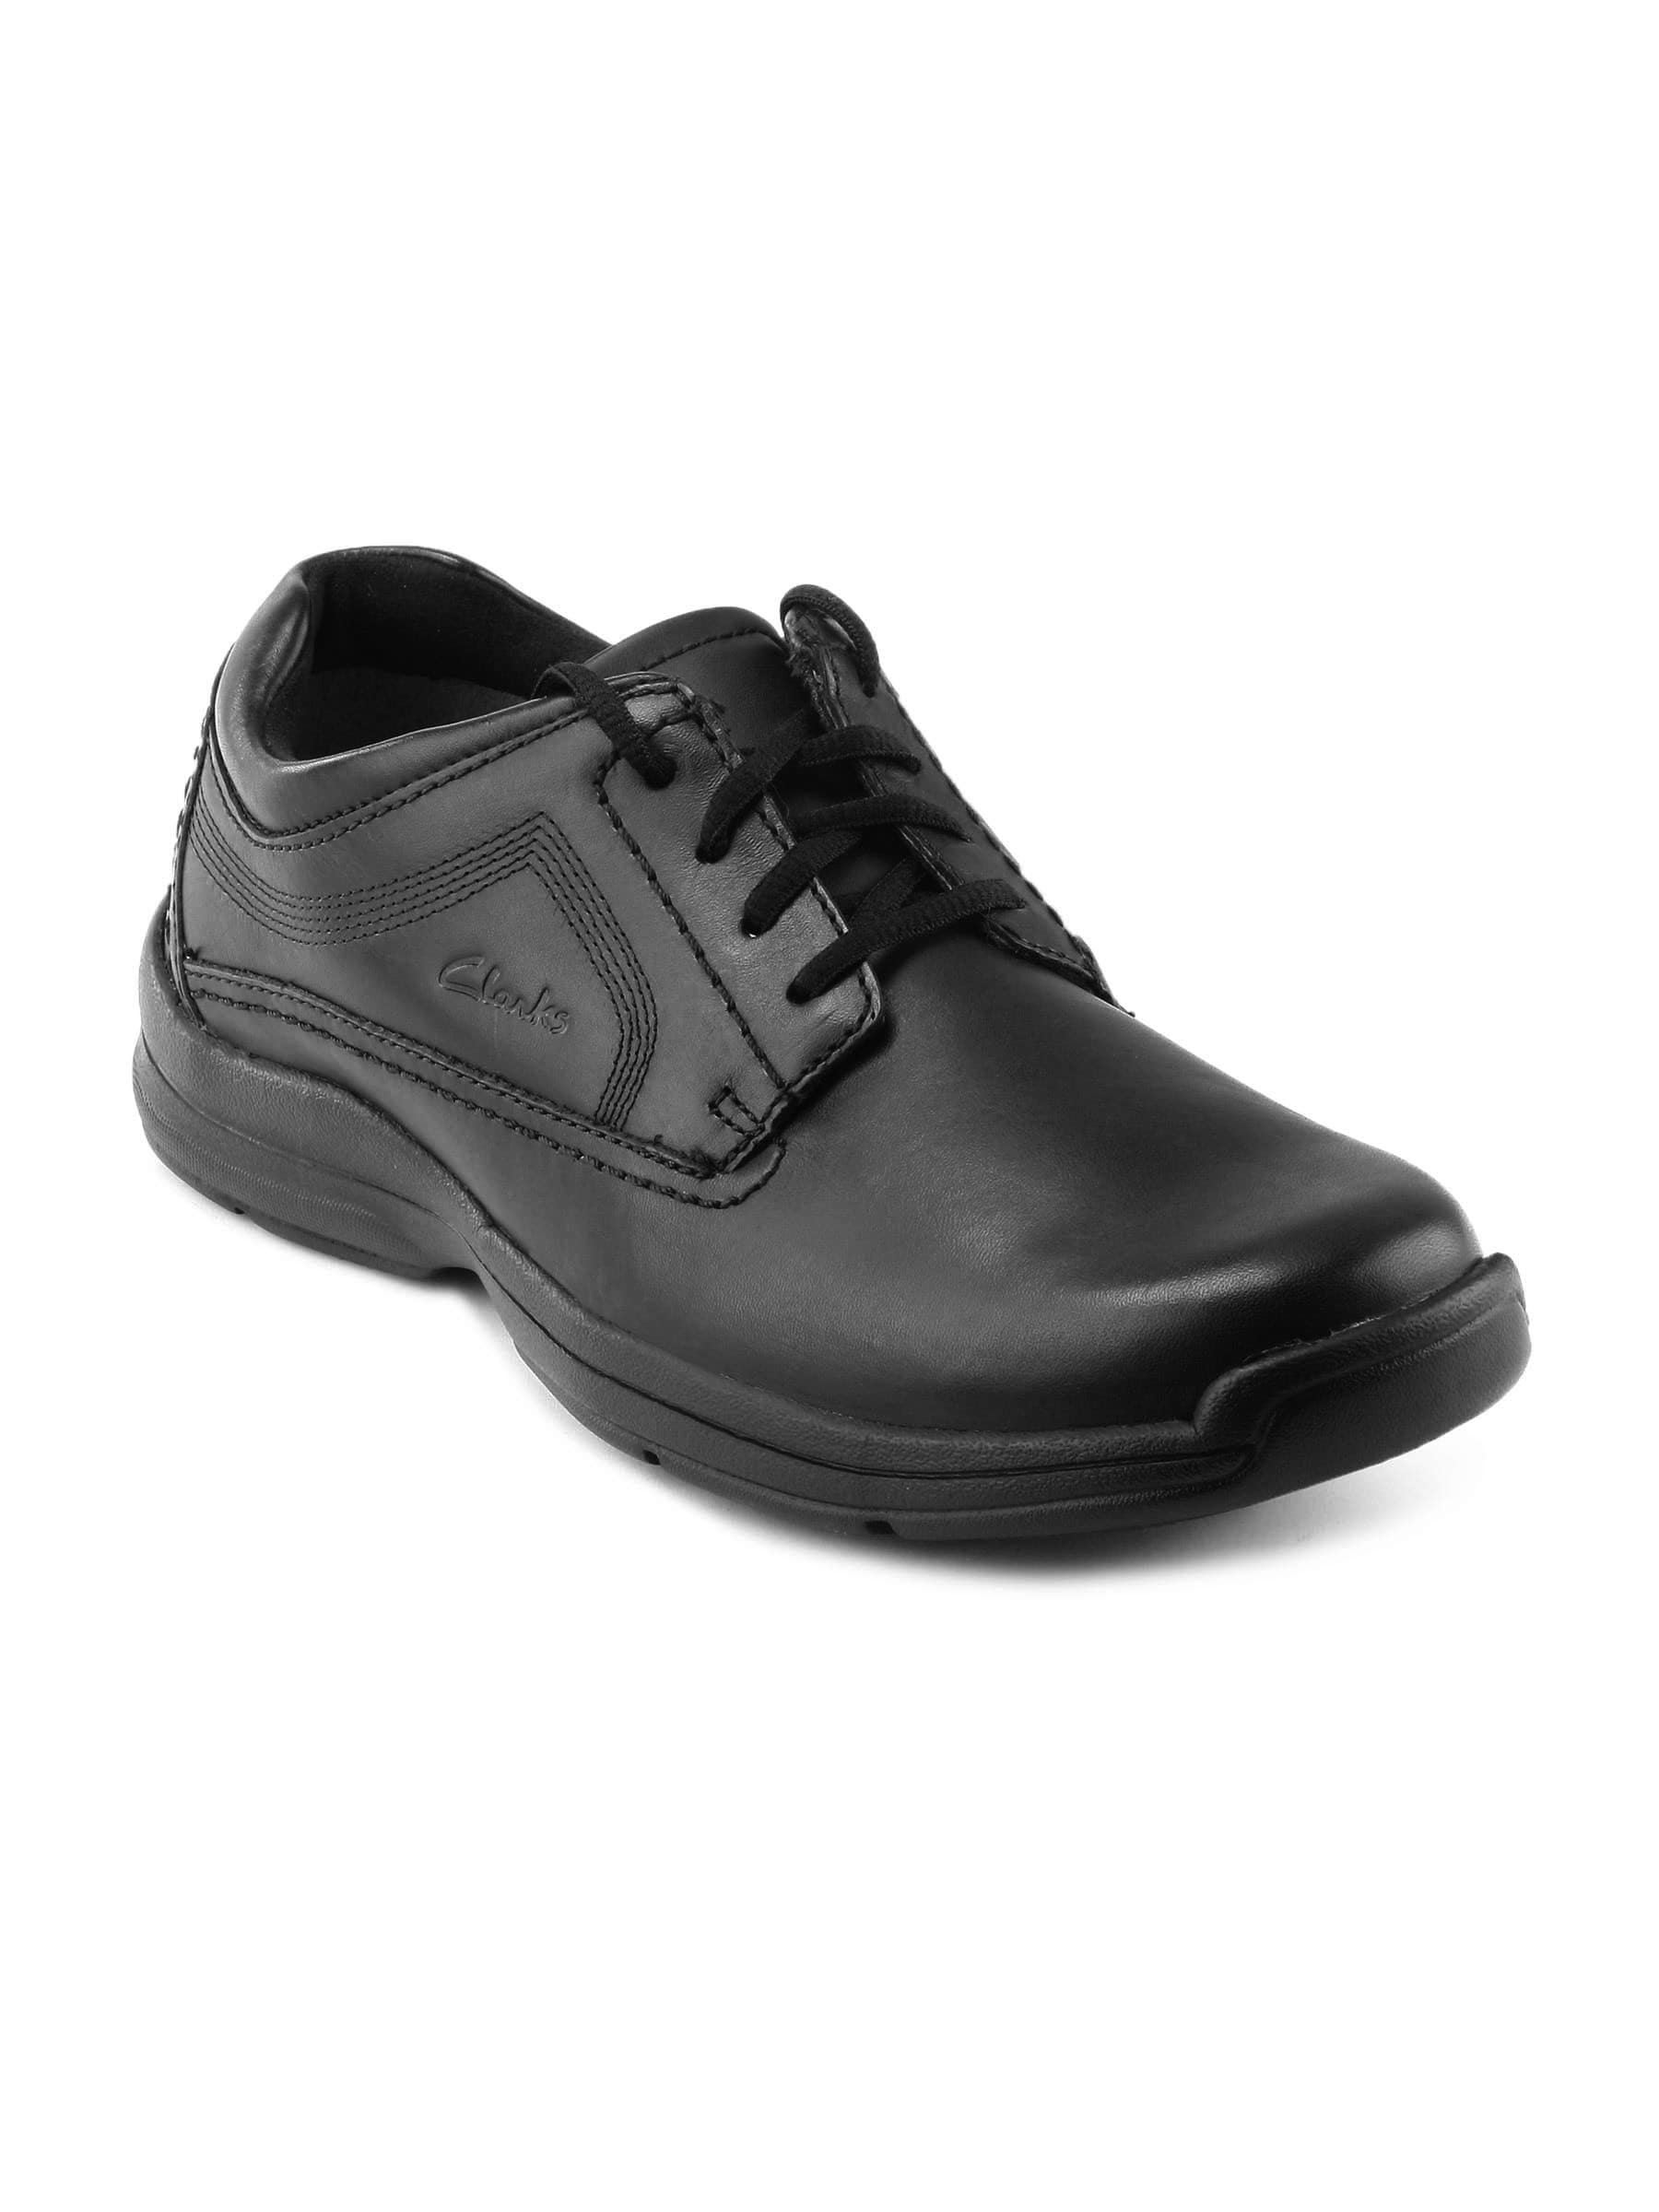 Clarks Men Black Leather Semiformal Shoes